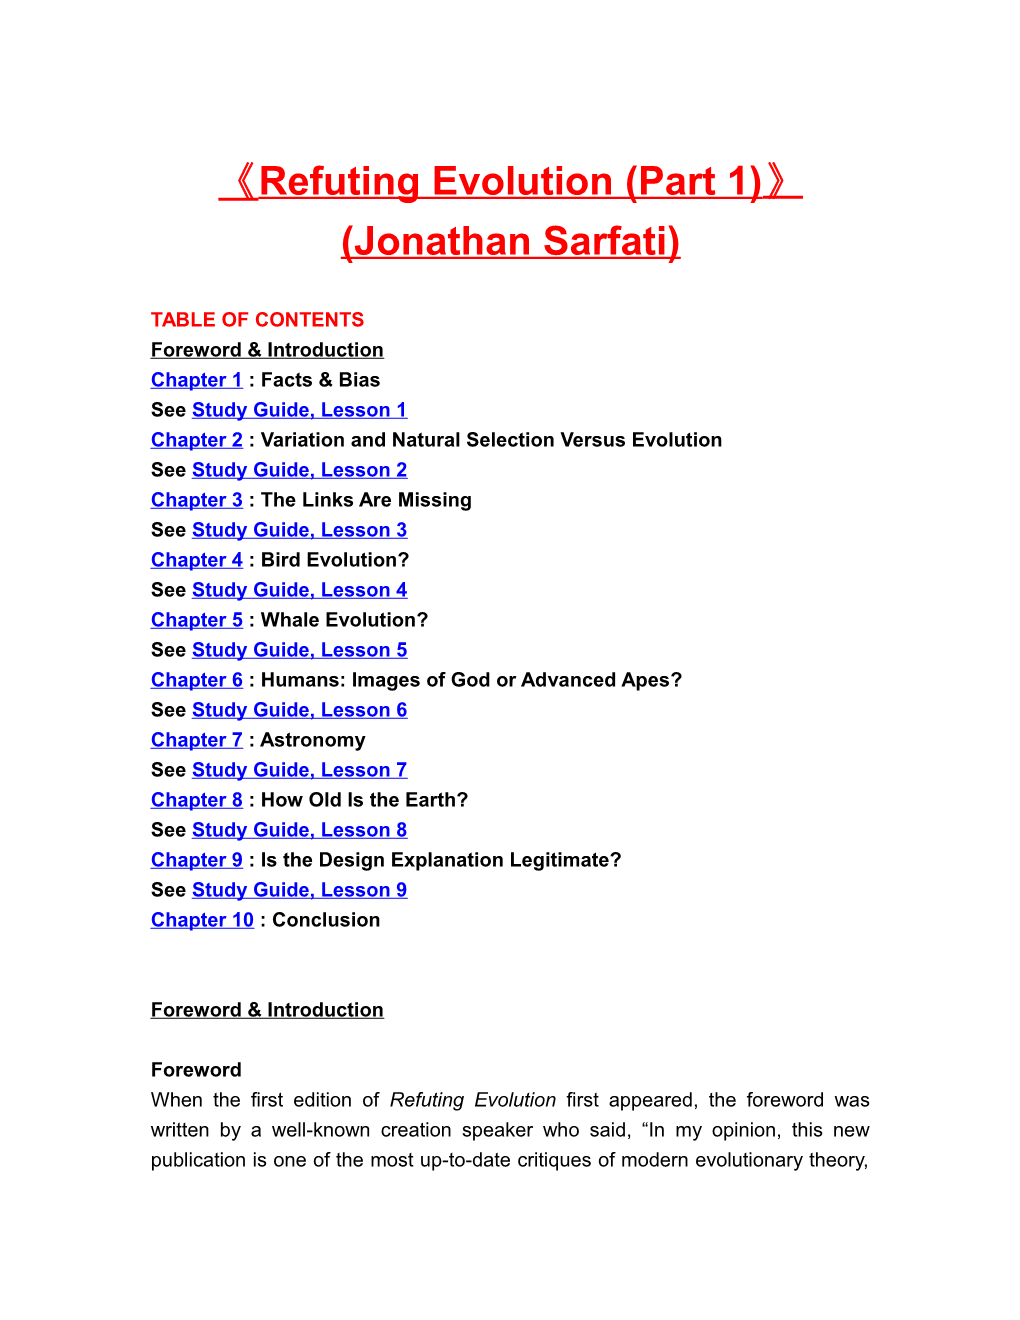 Refuting Evolution (Part 1) (Jonathan Sarfati)